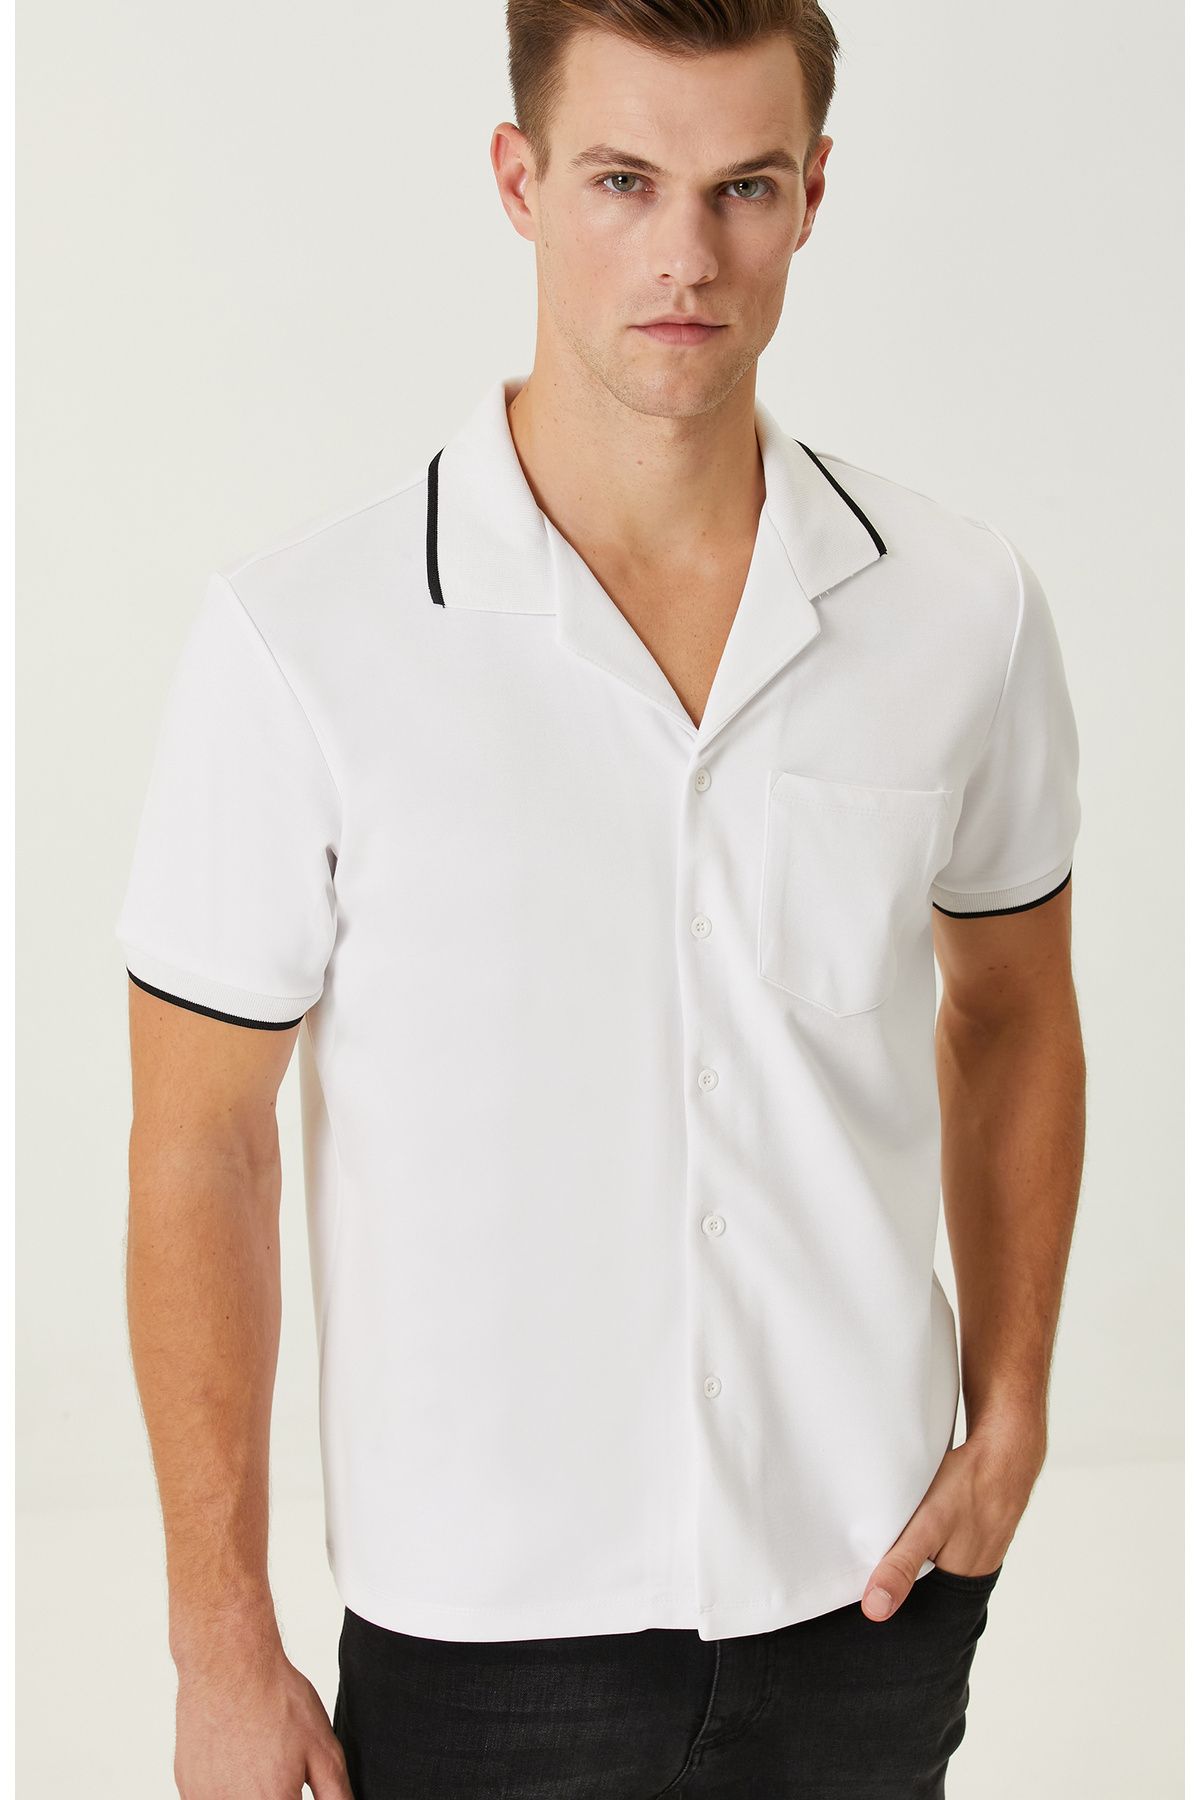 Network Erkek Beyaz Örme Polo Yaka Slim Fit Kısa Kollu Gömlek